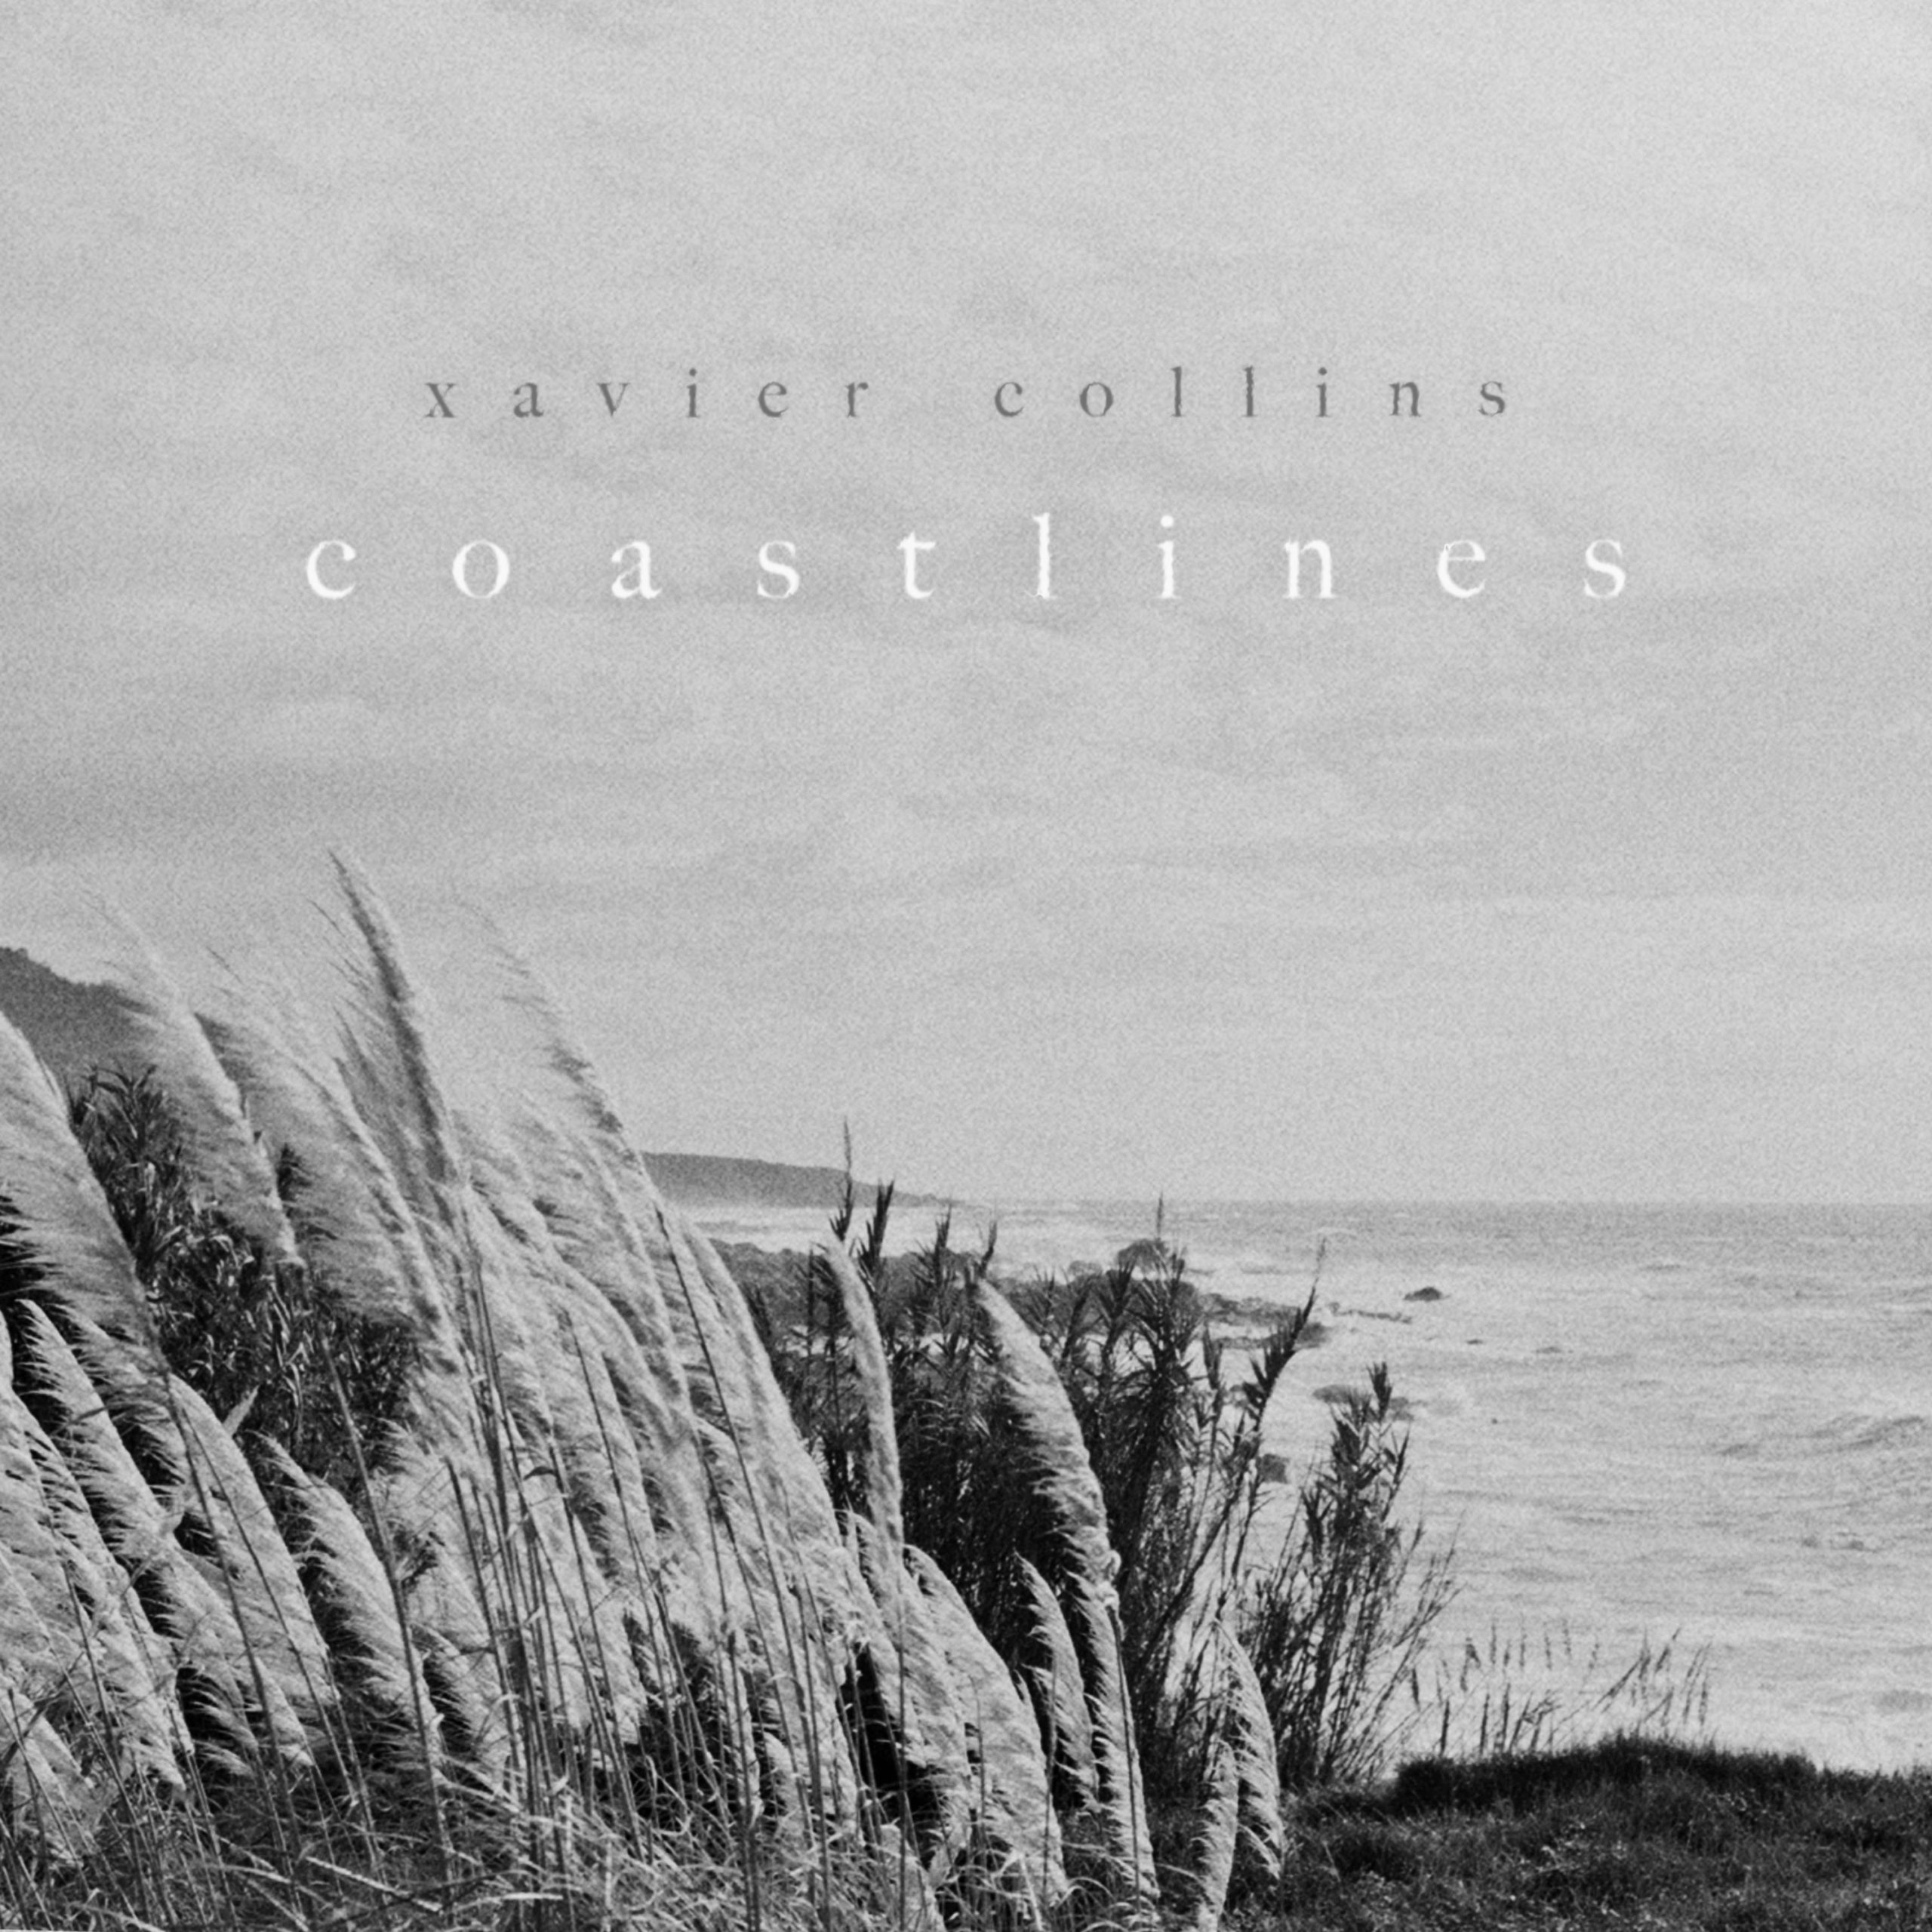 coastlines - xavier collins - uk - indie music - indie rock - new music - music blog - indie blog - wolf in a suit - wolfinasuit - wolf in a suit blog - wolf in a suit music blog